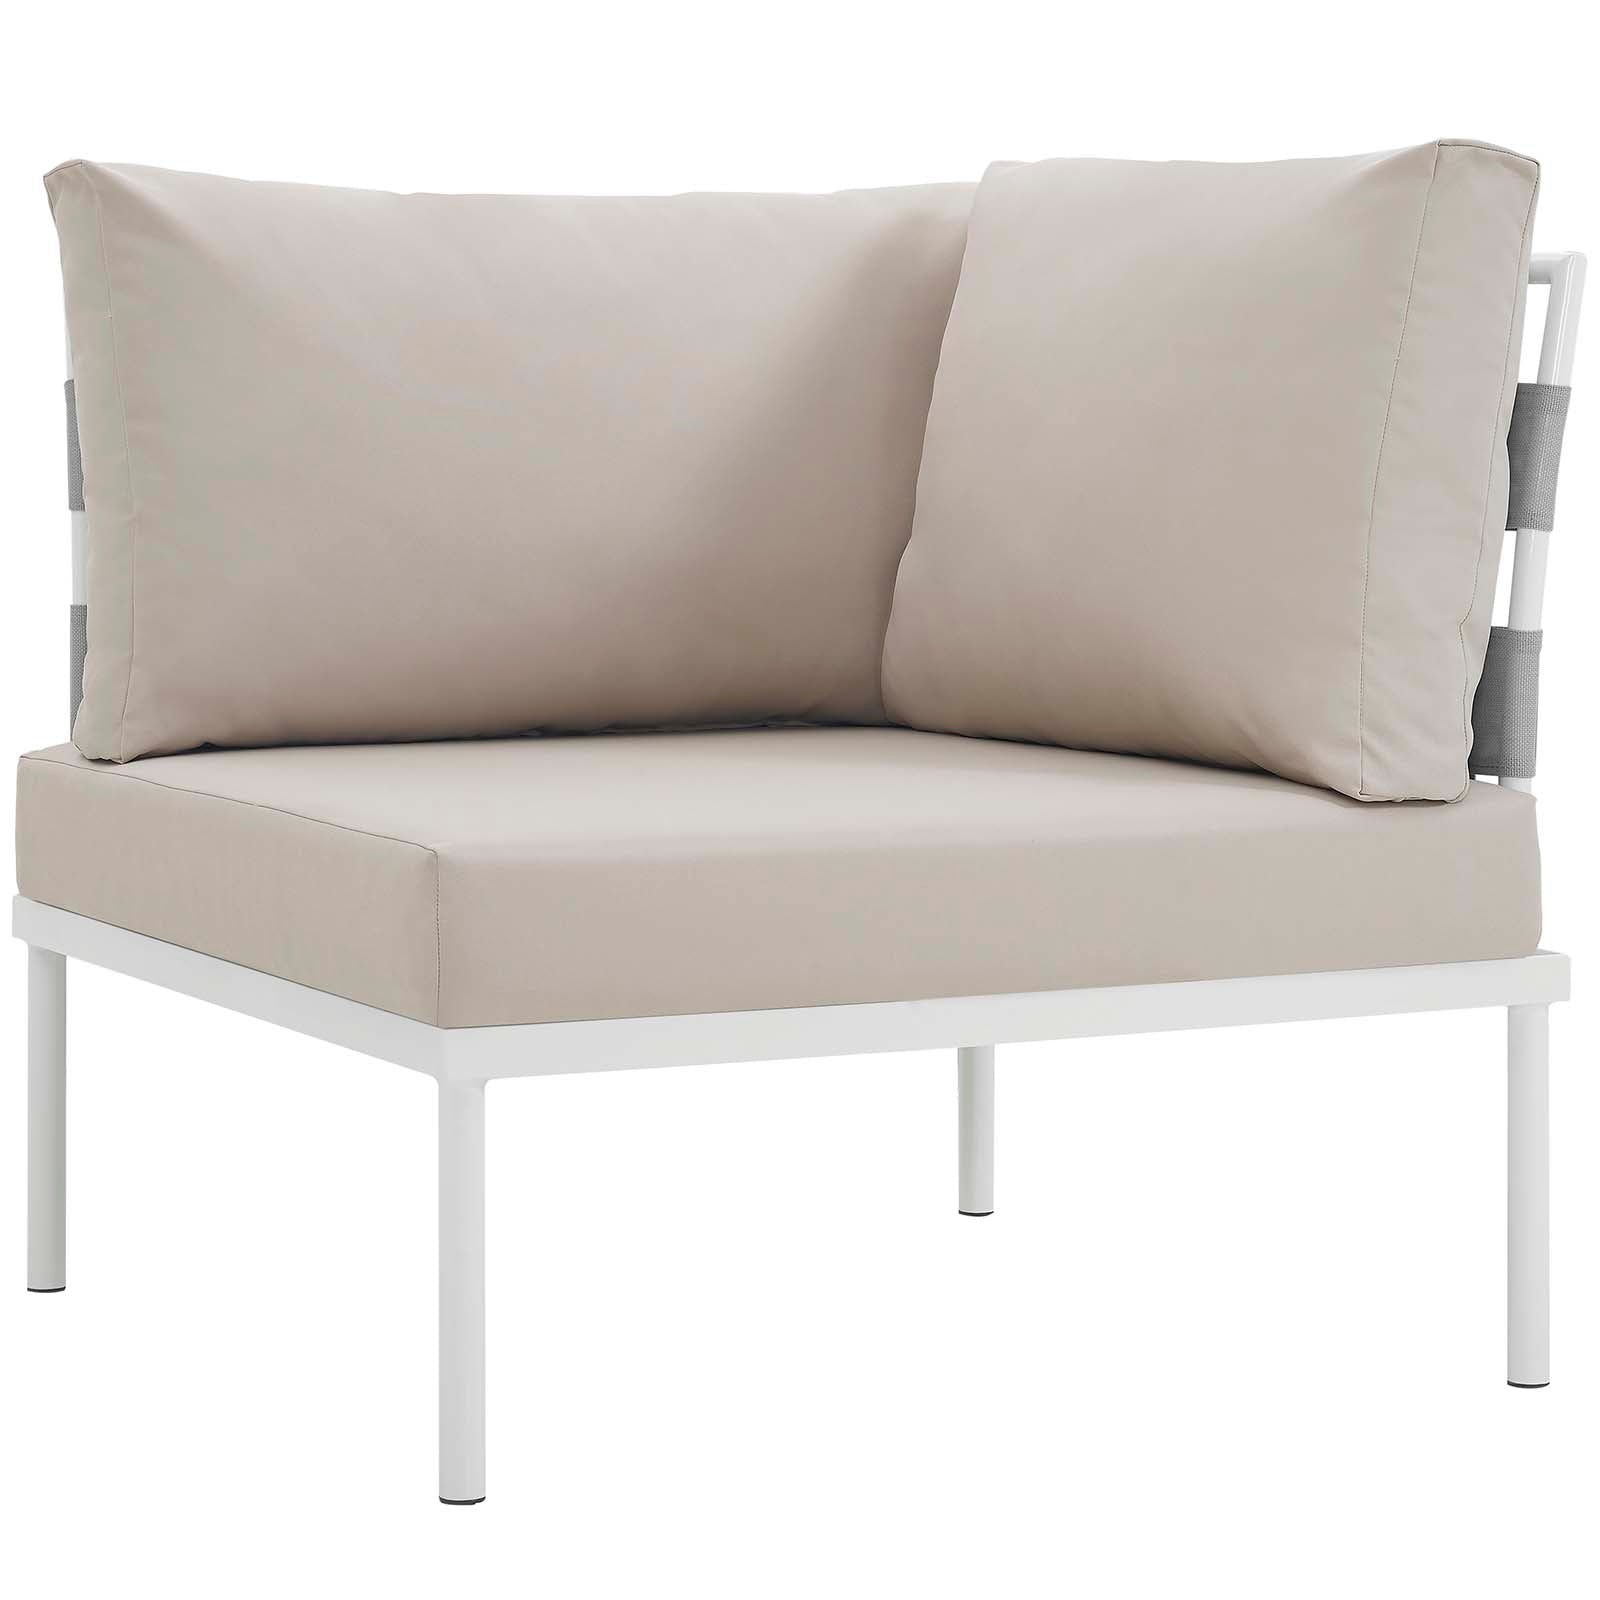 Modway Outdoor Conversation Sets - Harmony 10 Piece Outdoor Patio Aluminum Sectional Sofa Set White Beige